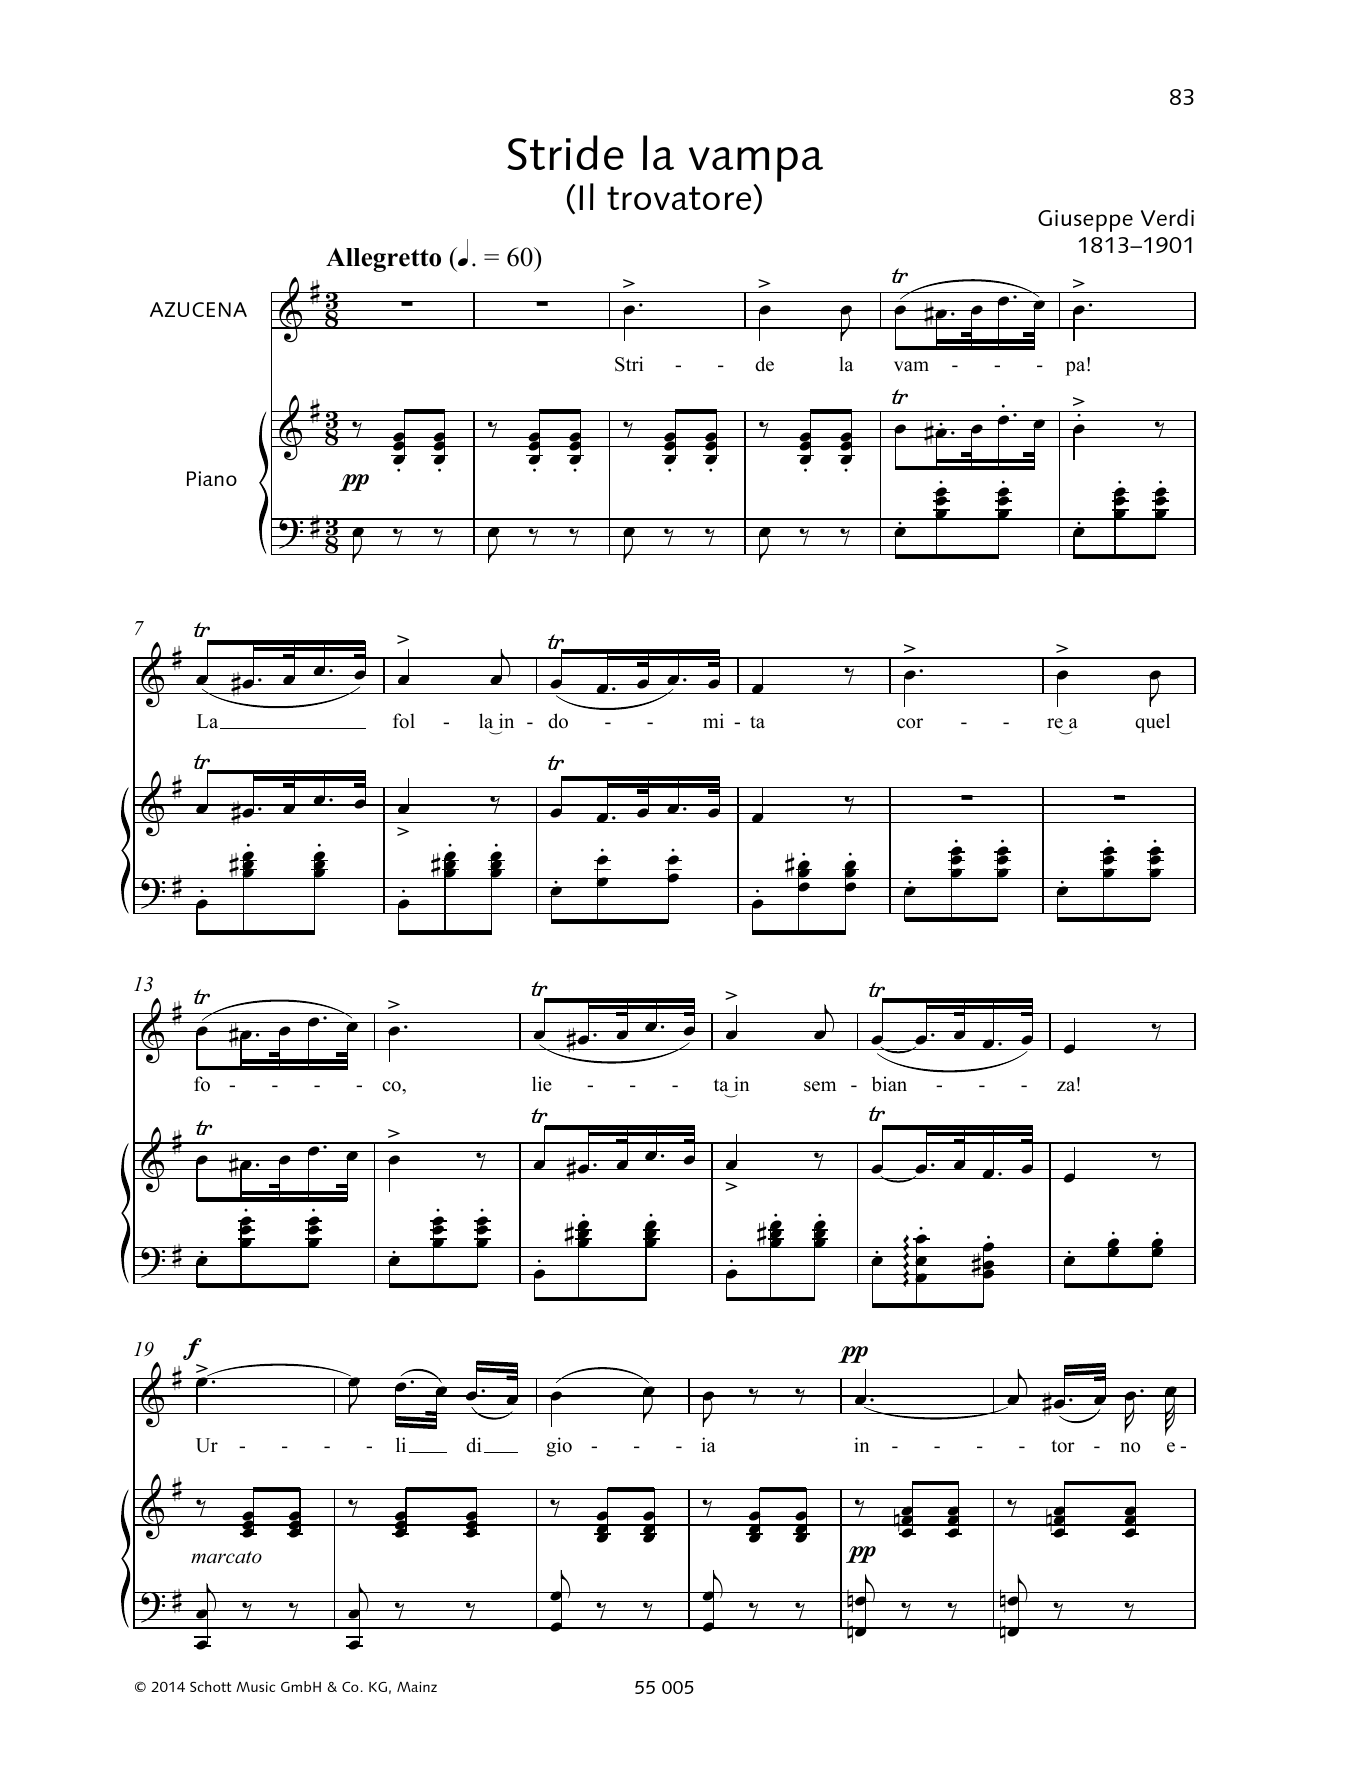 Giuseppe Verdi Stride la vampa Sheet Music Notes & Chords for Piano & Vocal - Download or Print PDF